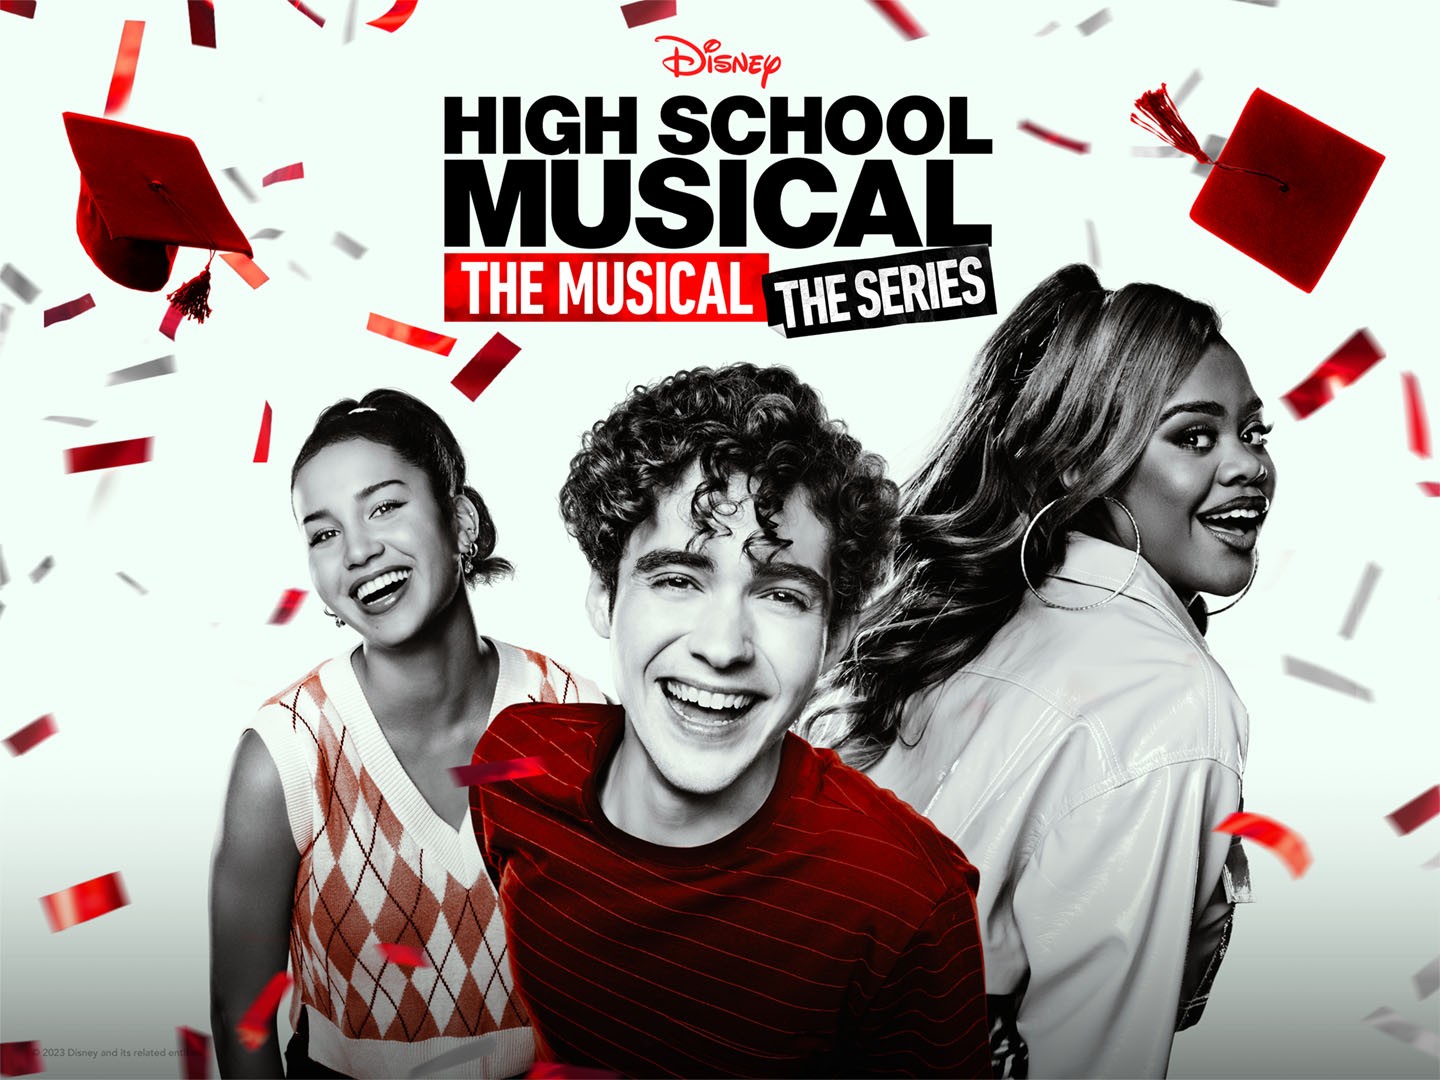 21 High School Musical Facts - High School Musical 4